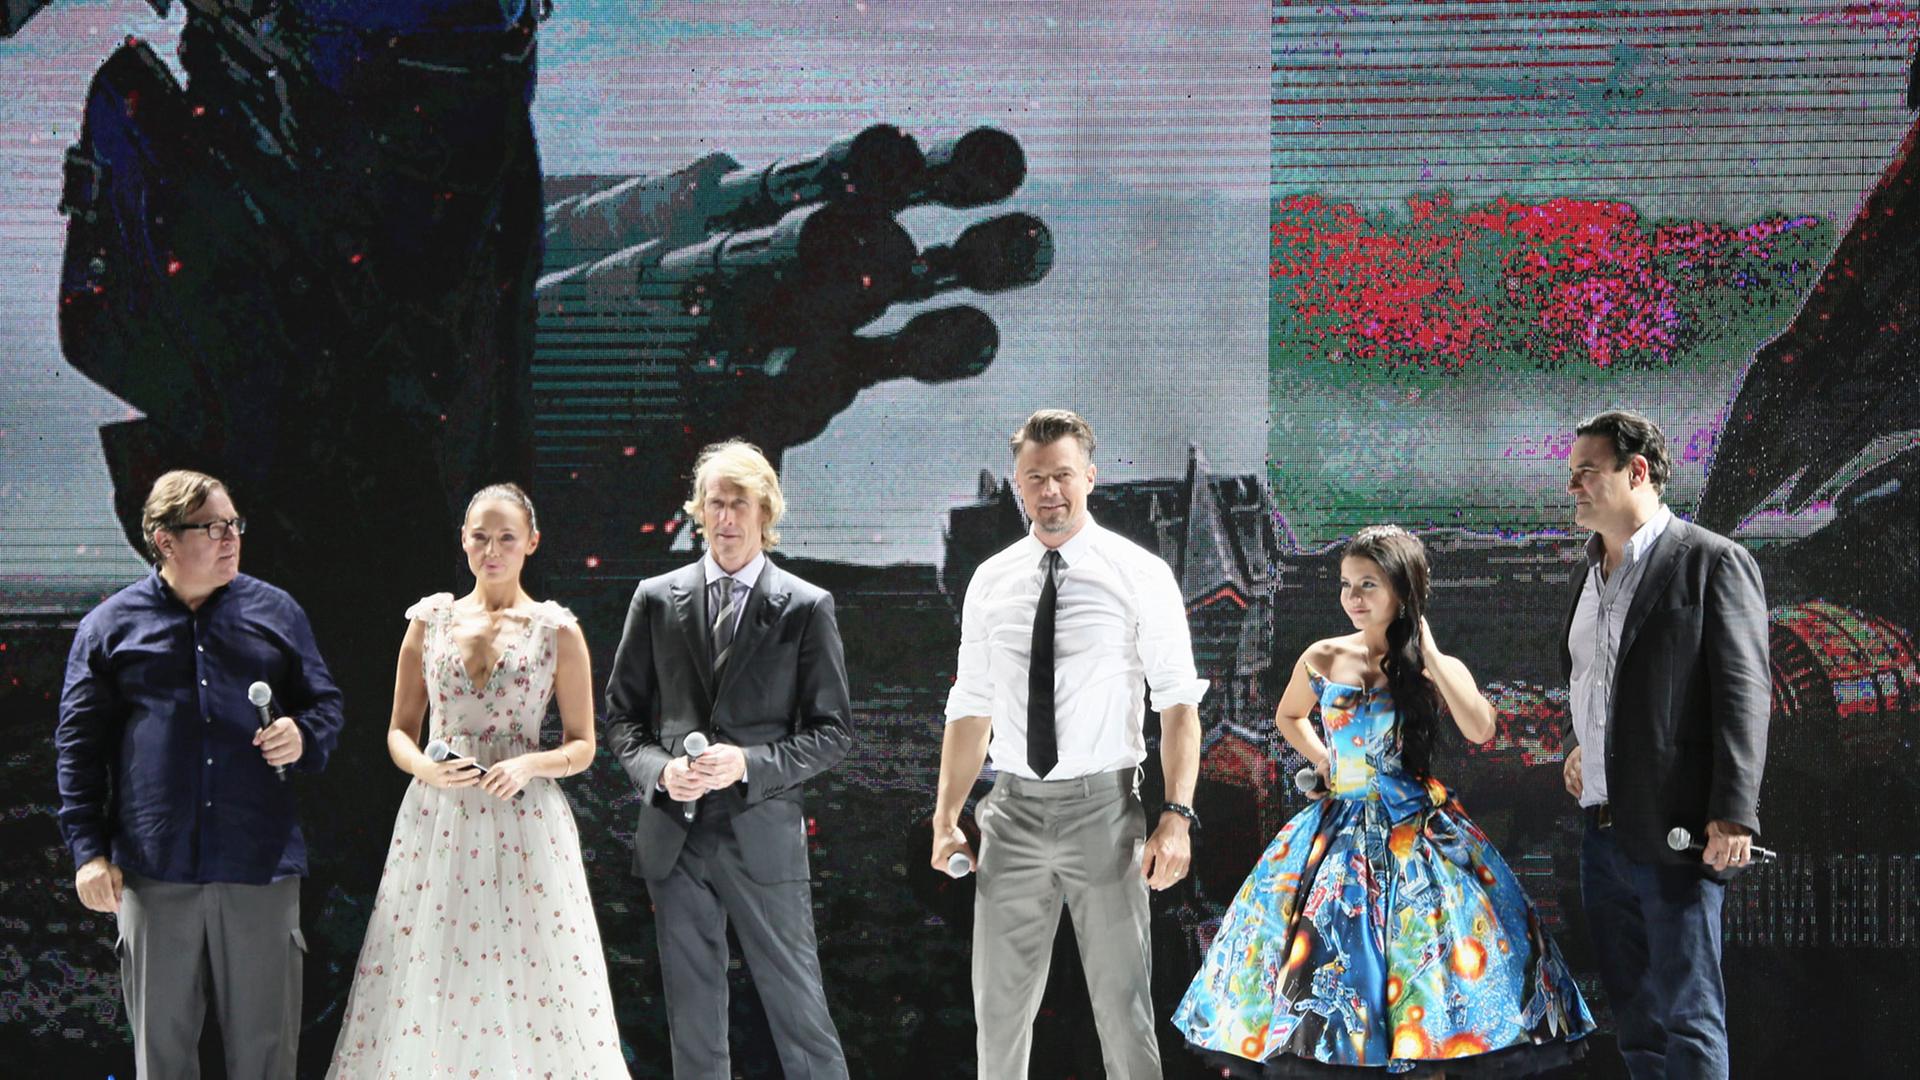 PK zum Film "Transformers: The Last Knight" in China